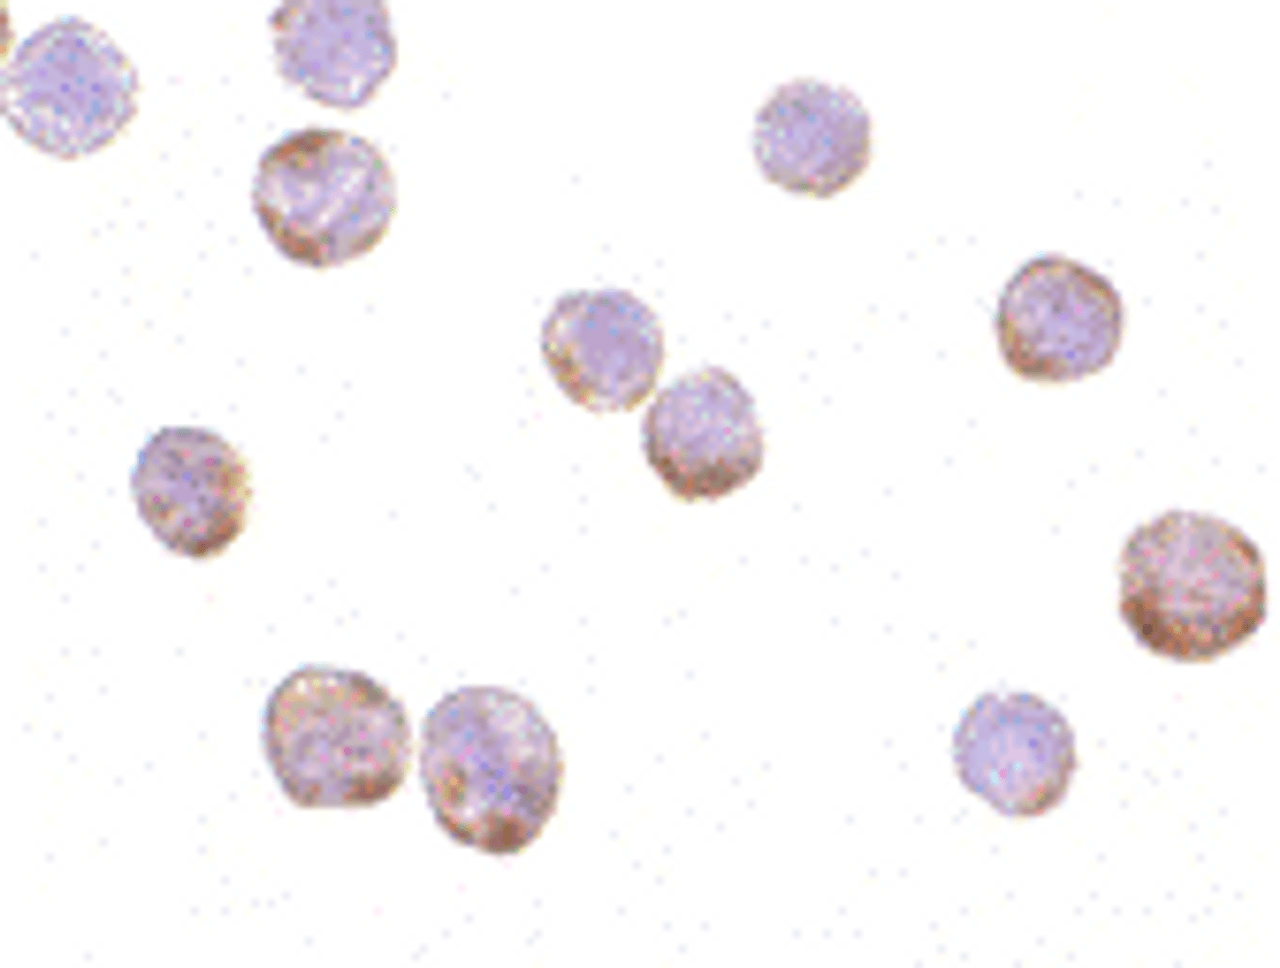 Immunocytochemistry of Actin in HeLa cells with Actin antibody at 1 ug/mL.